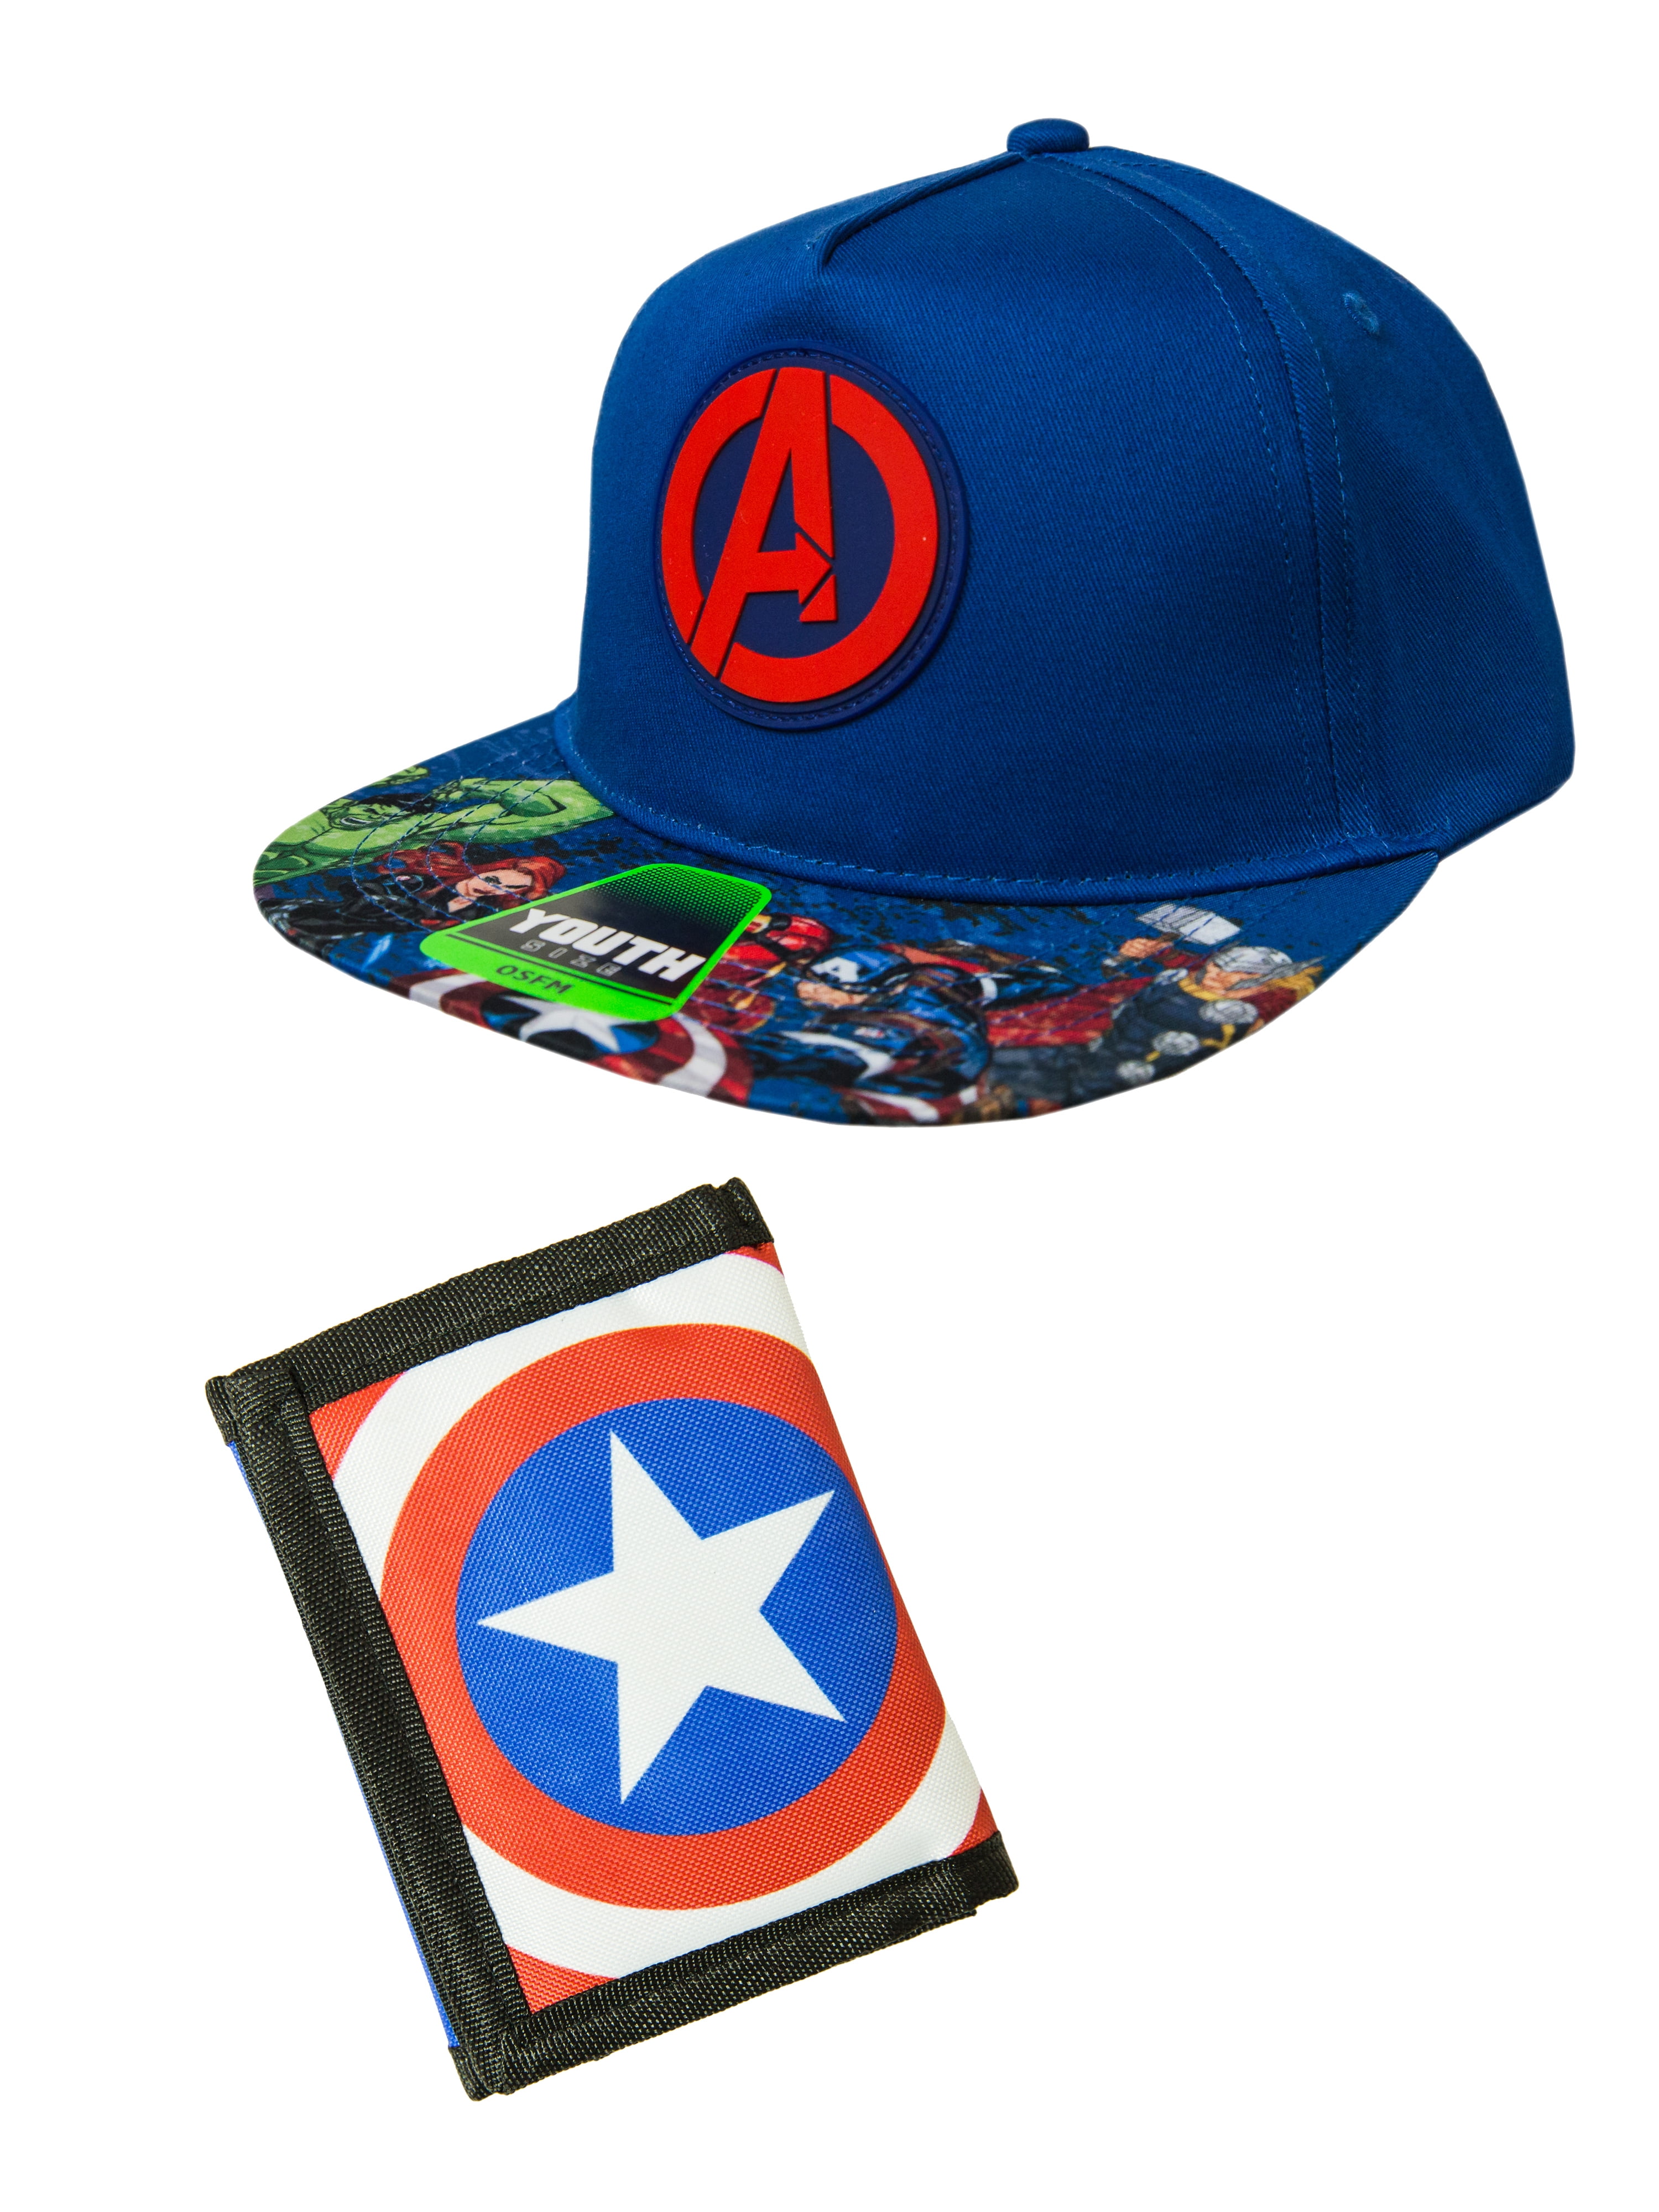 Boys Character Avengers Capt America Hulk Iron Man Baseball Caps Summer Hat 2-8Y 